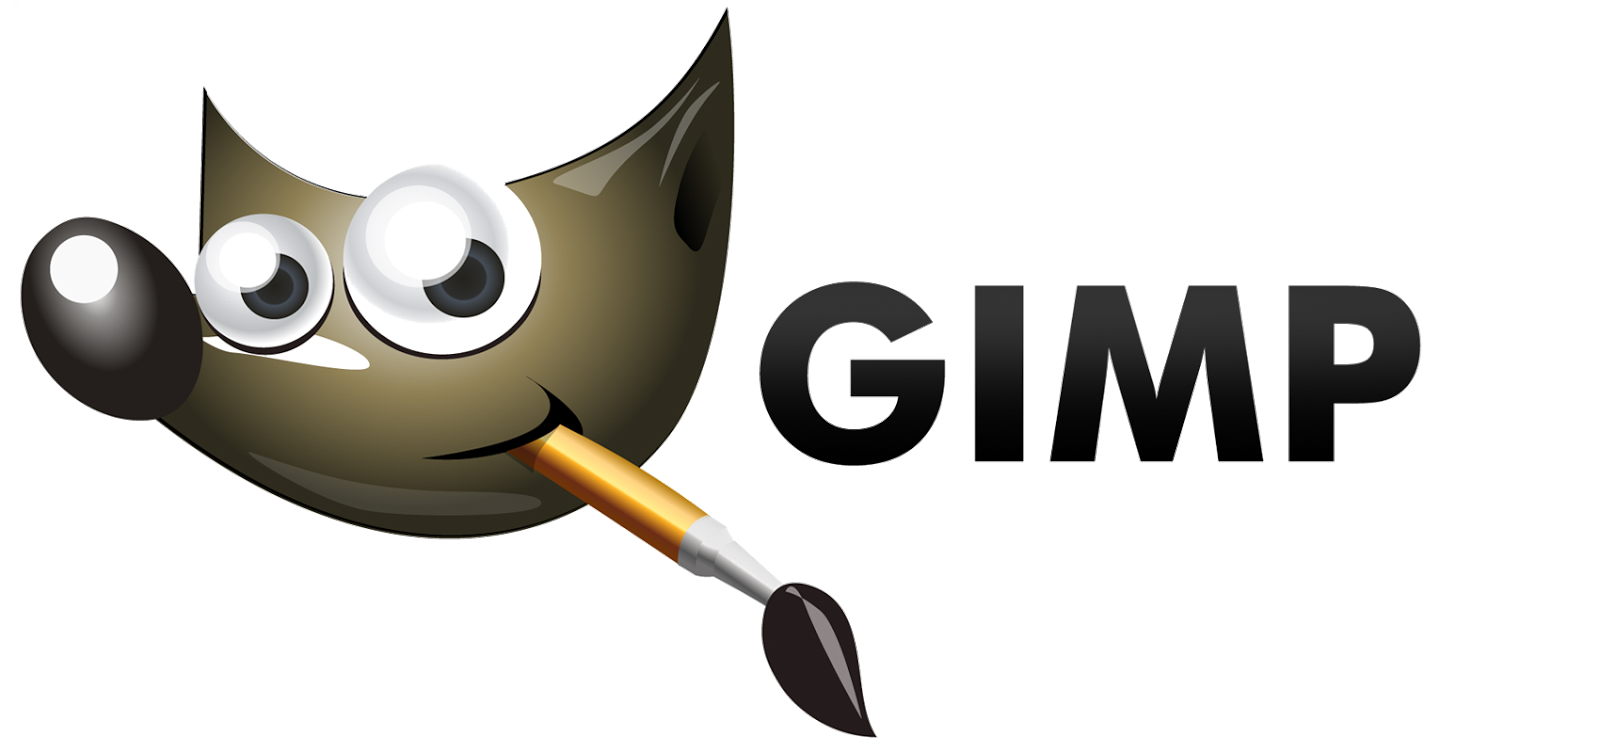 gnu image manipulation program tools